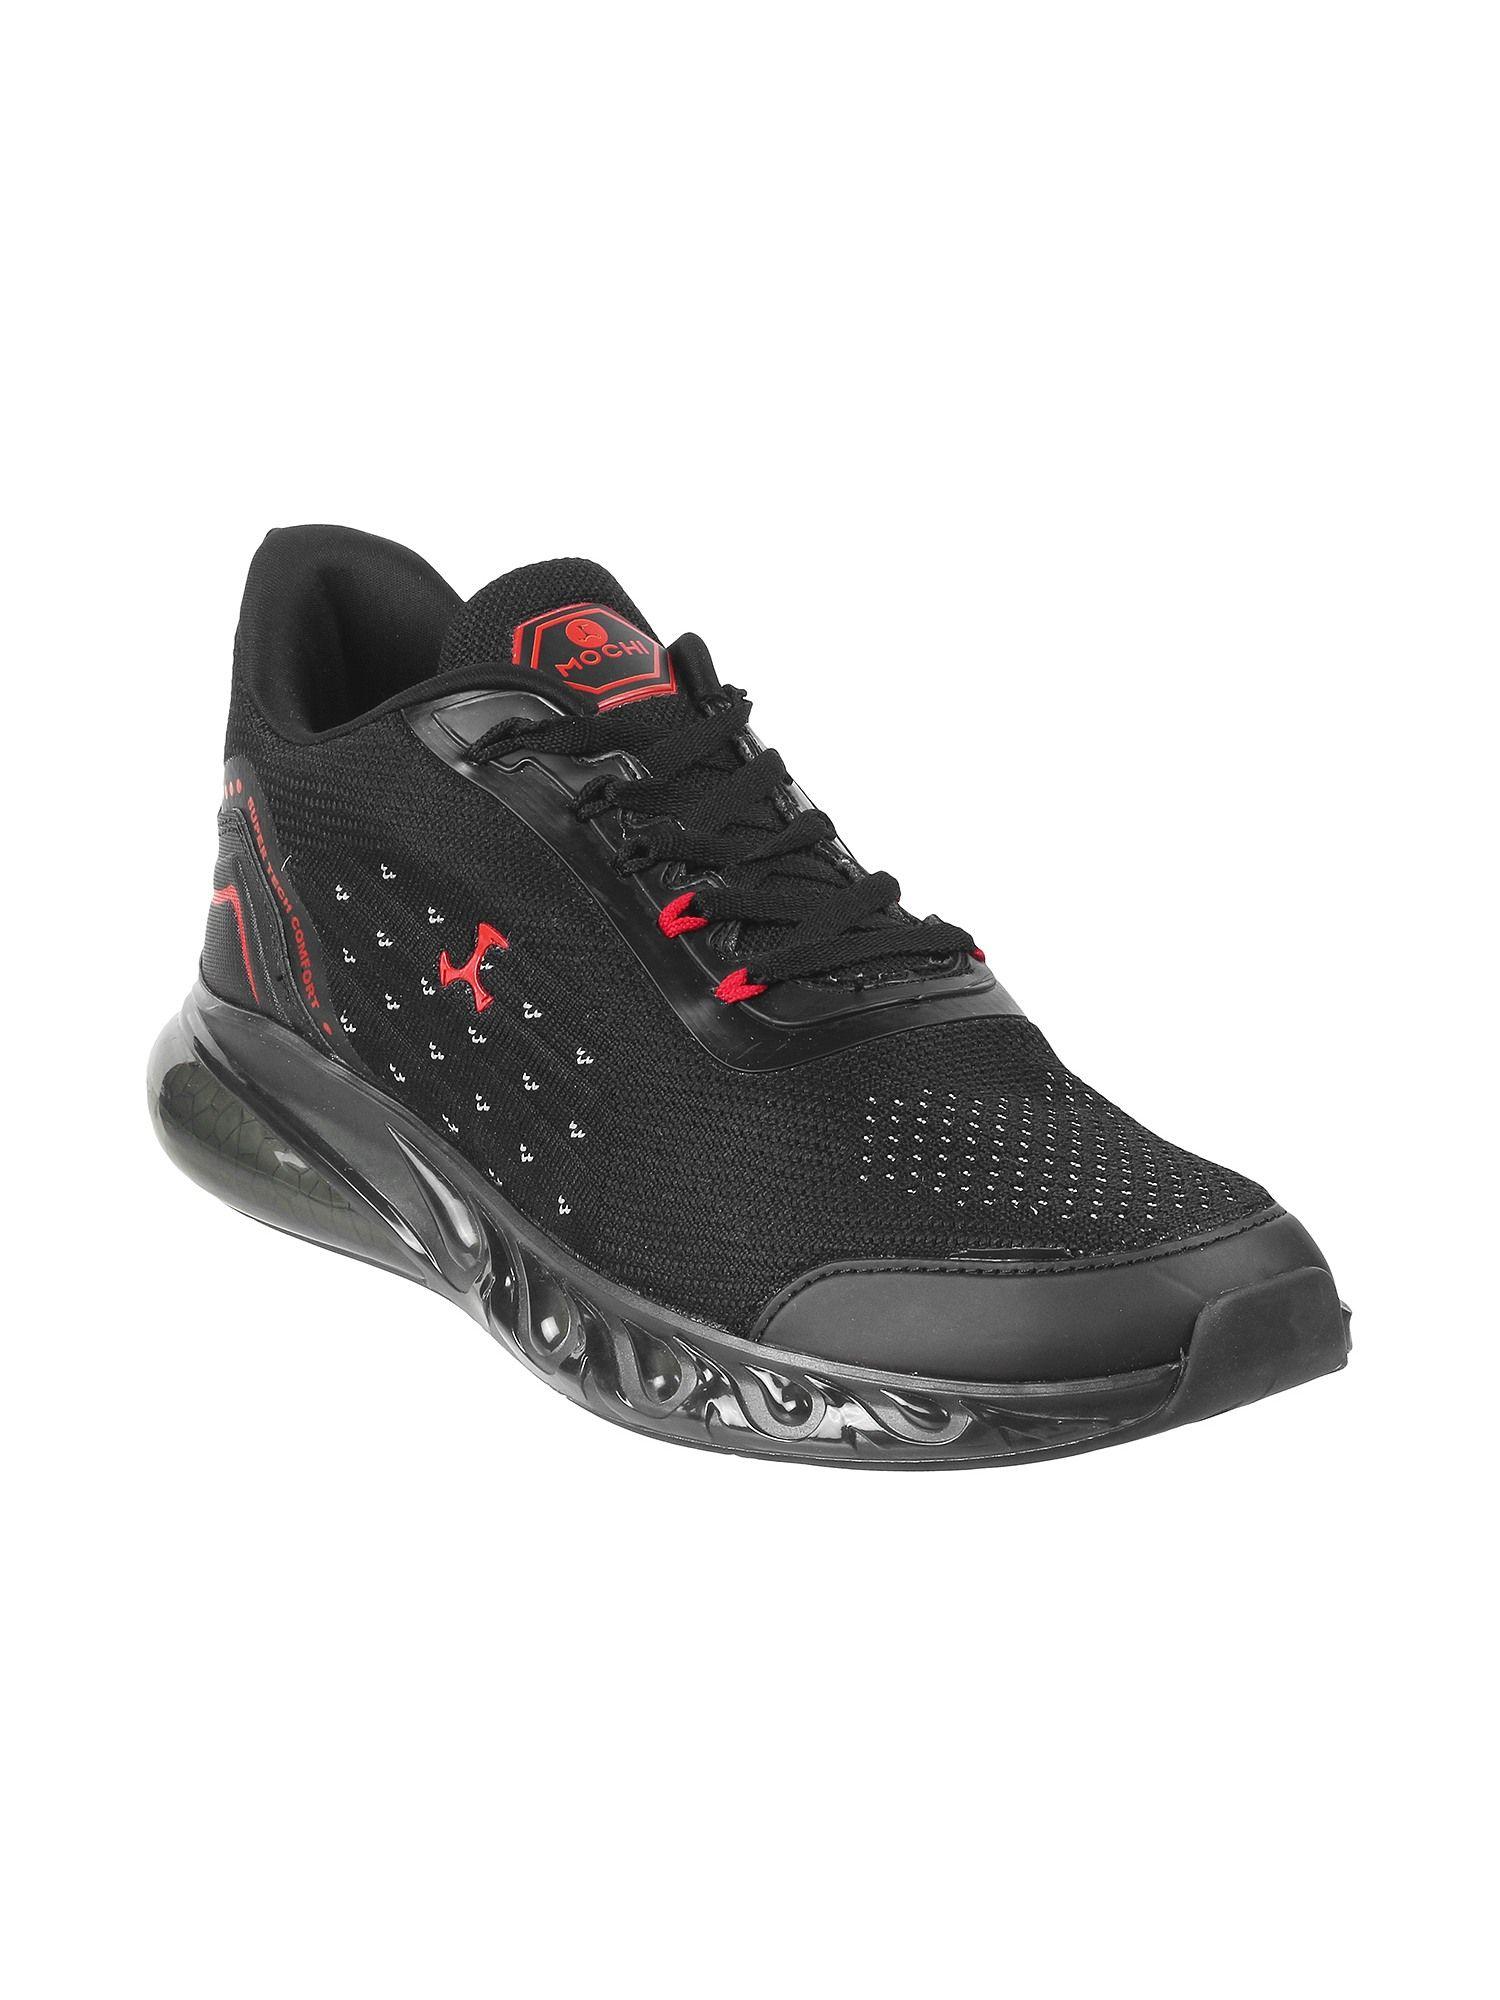 mens-black-sports-lace-ups-shoesmochi-textured-black-sports-shoes